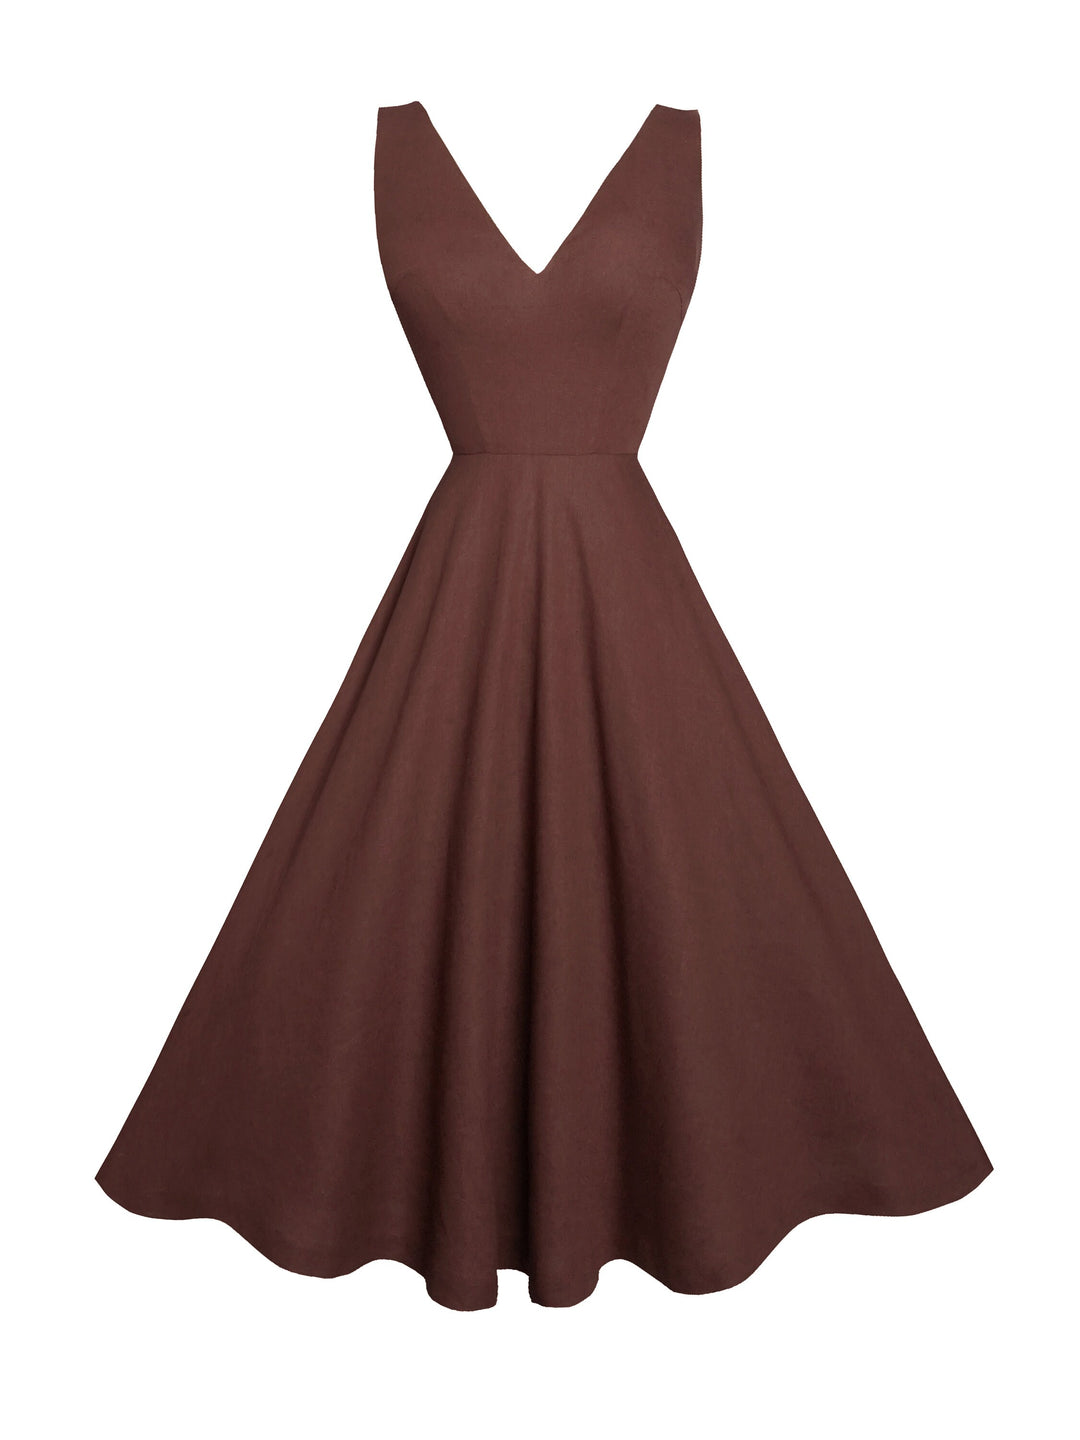 RTS - Size M - Diana Dress in Walnut Linen